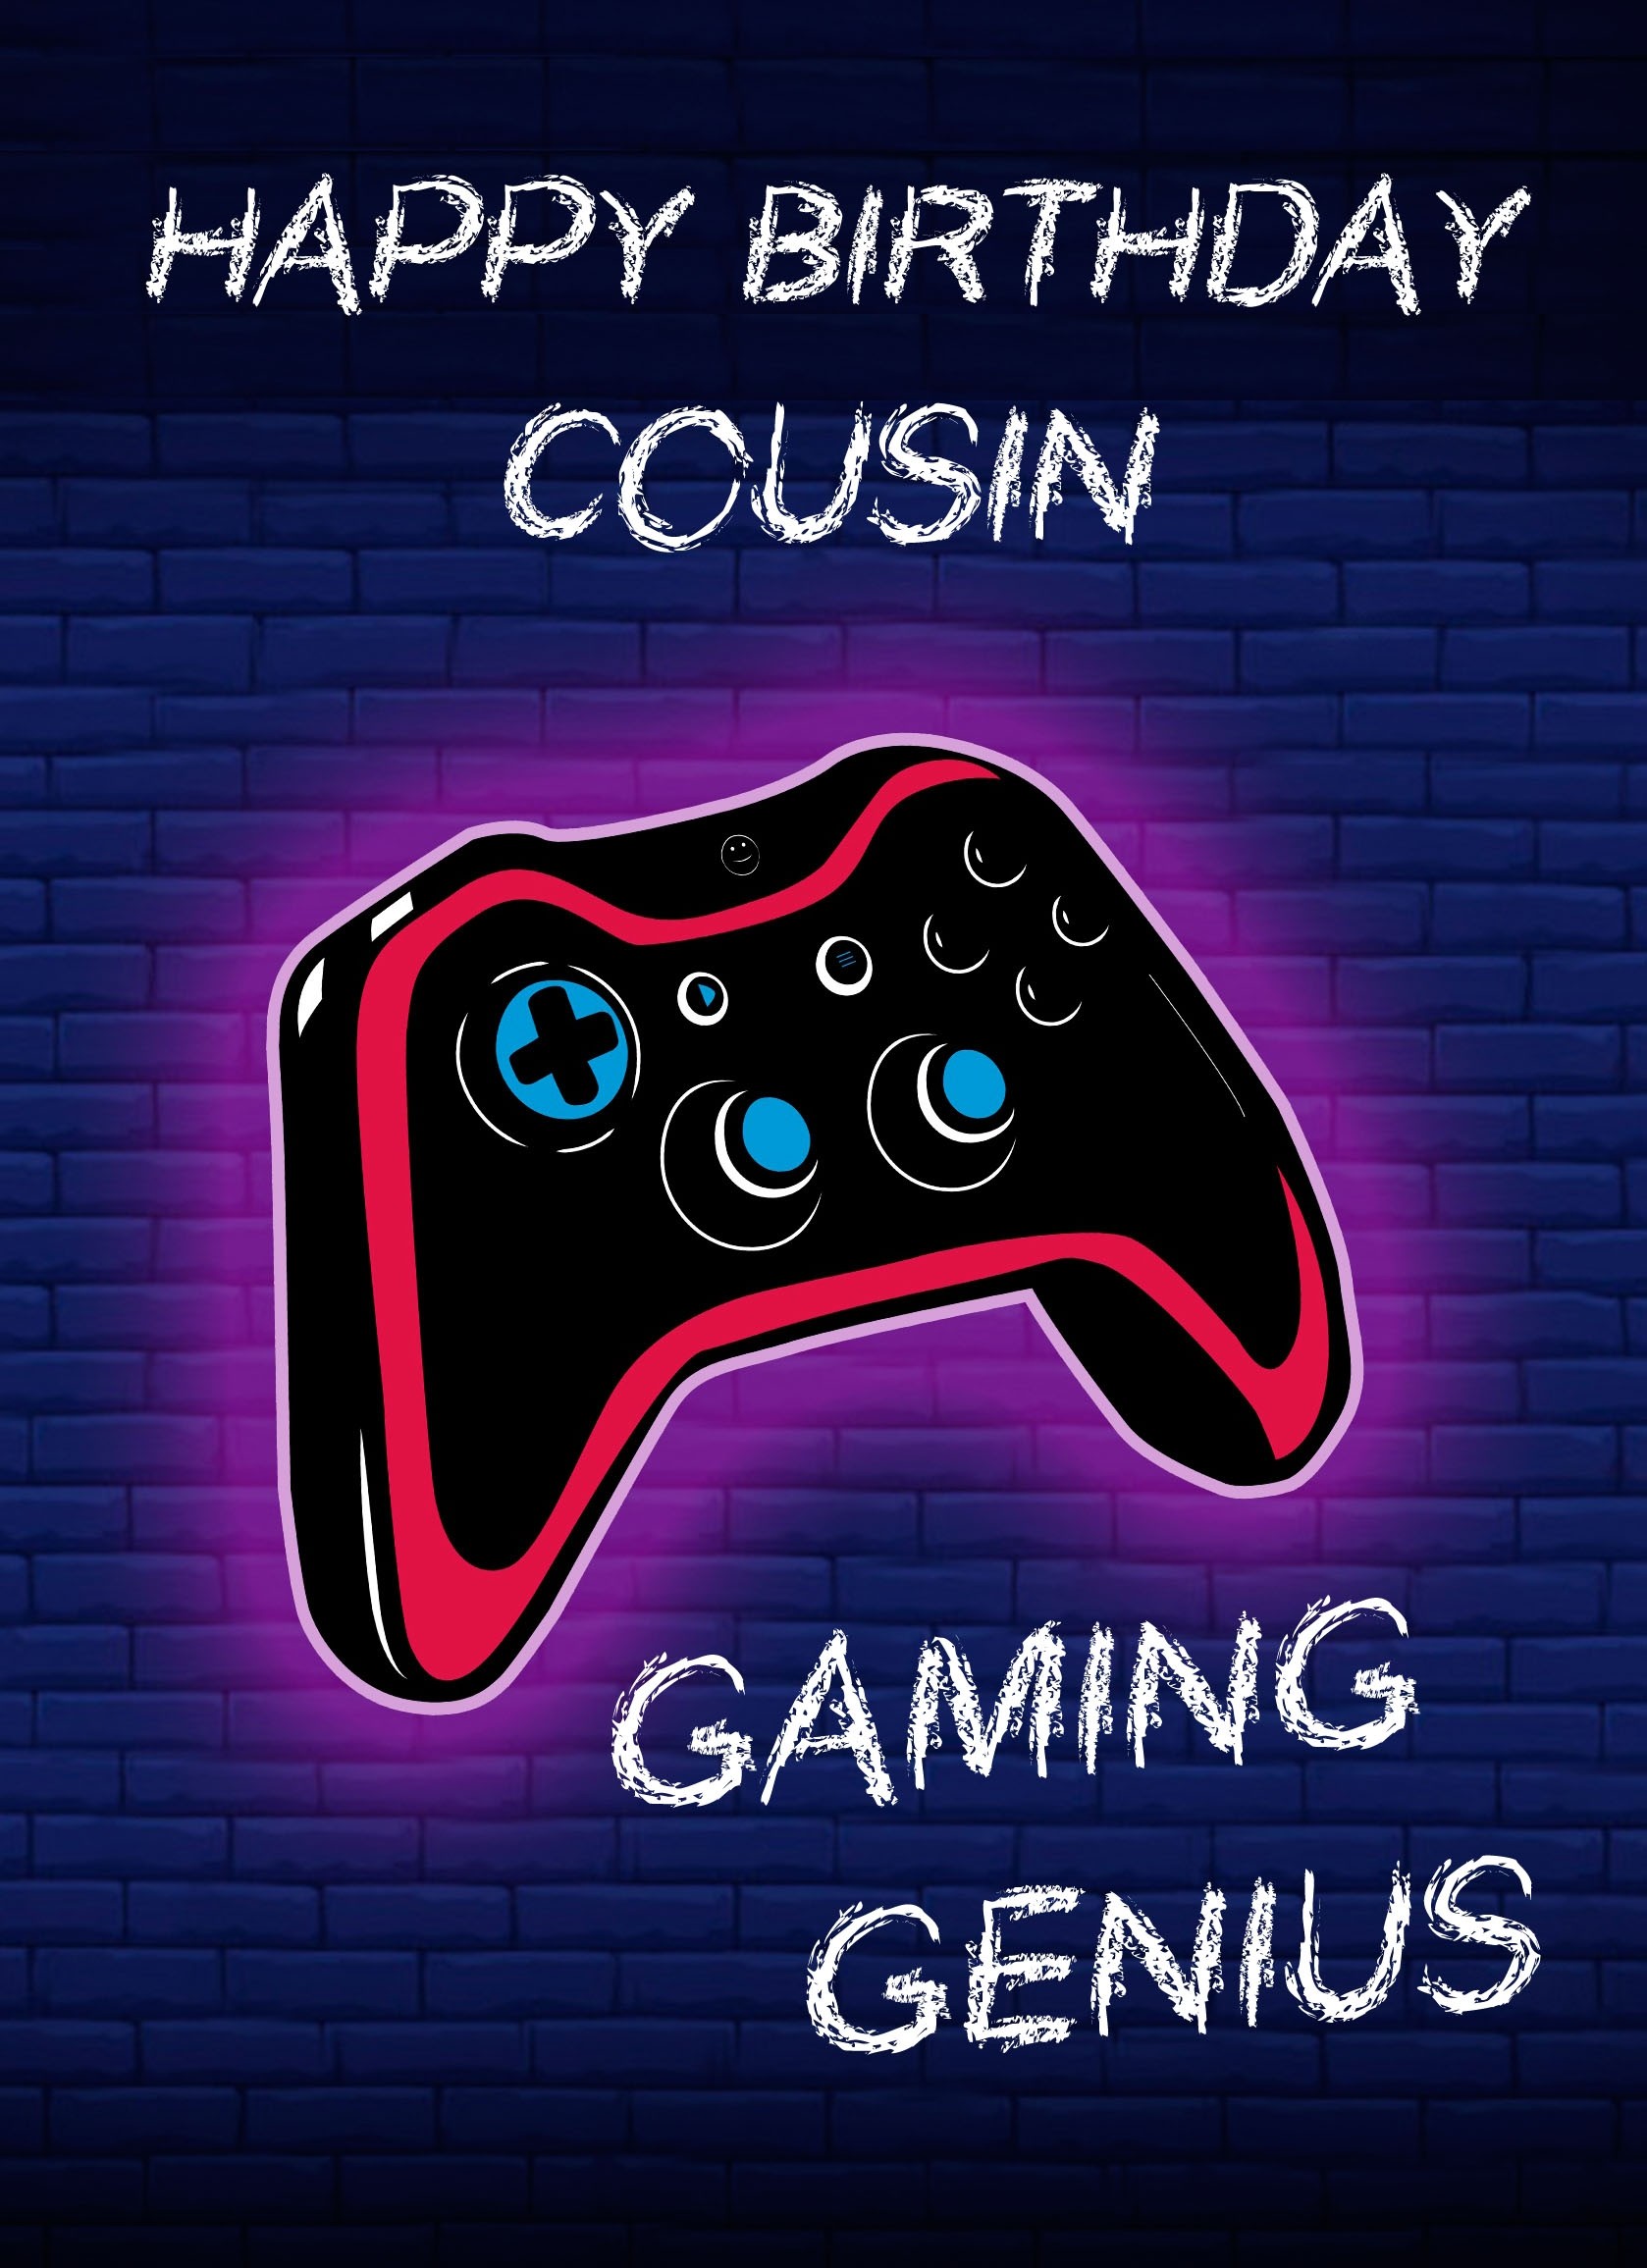 Gamer Birthday Card For Cousin (Gaming Genius)